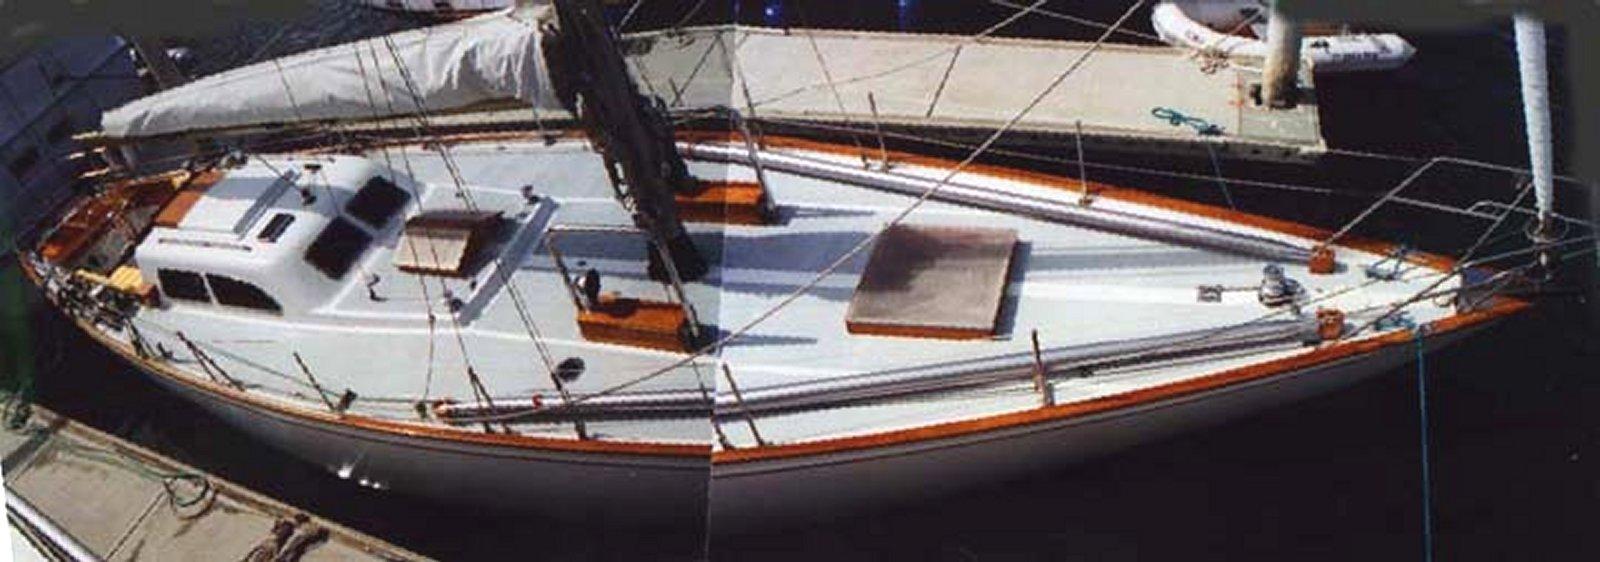 1967 Columbia Yacht 50